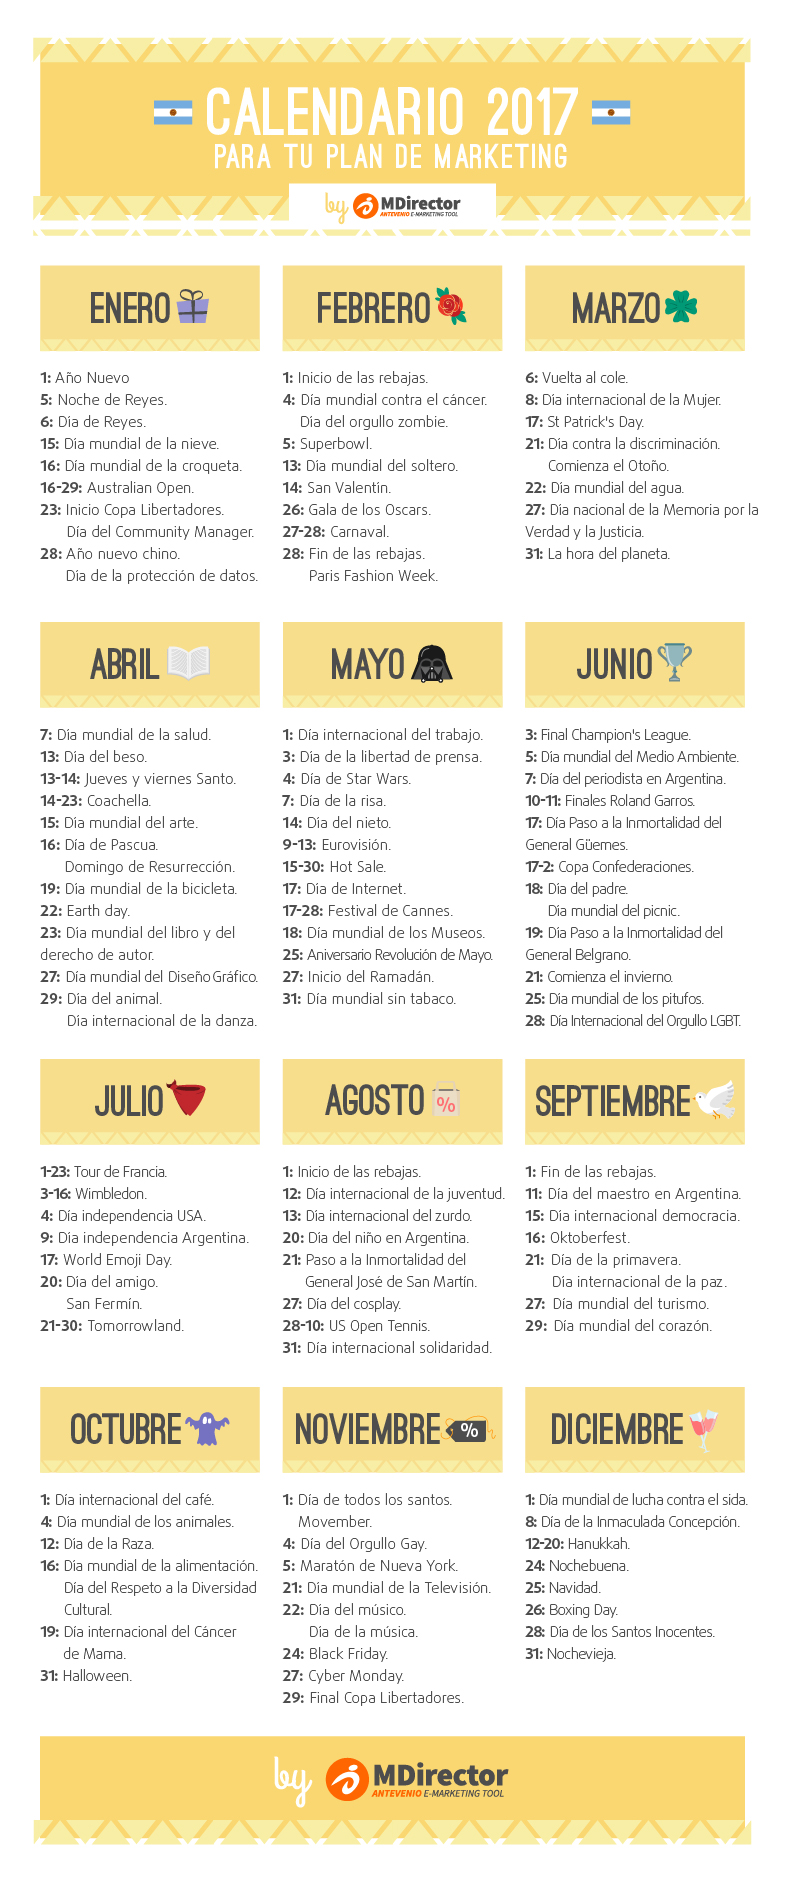 calendario de marketing 2017 para Argentina